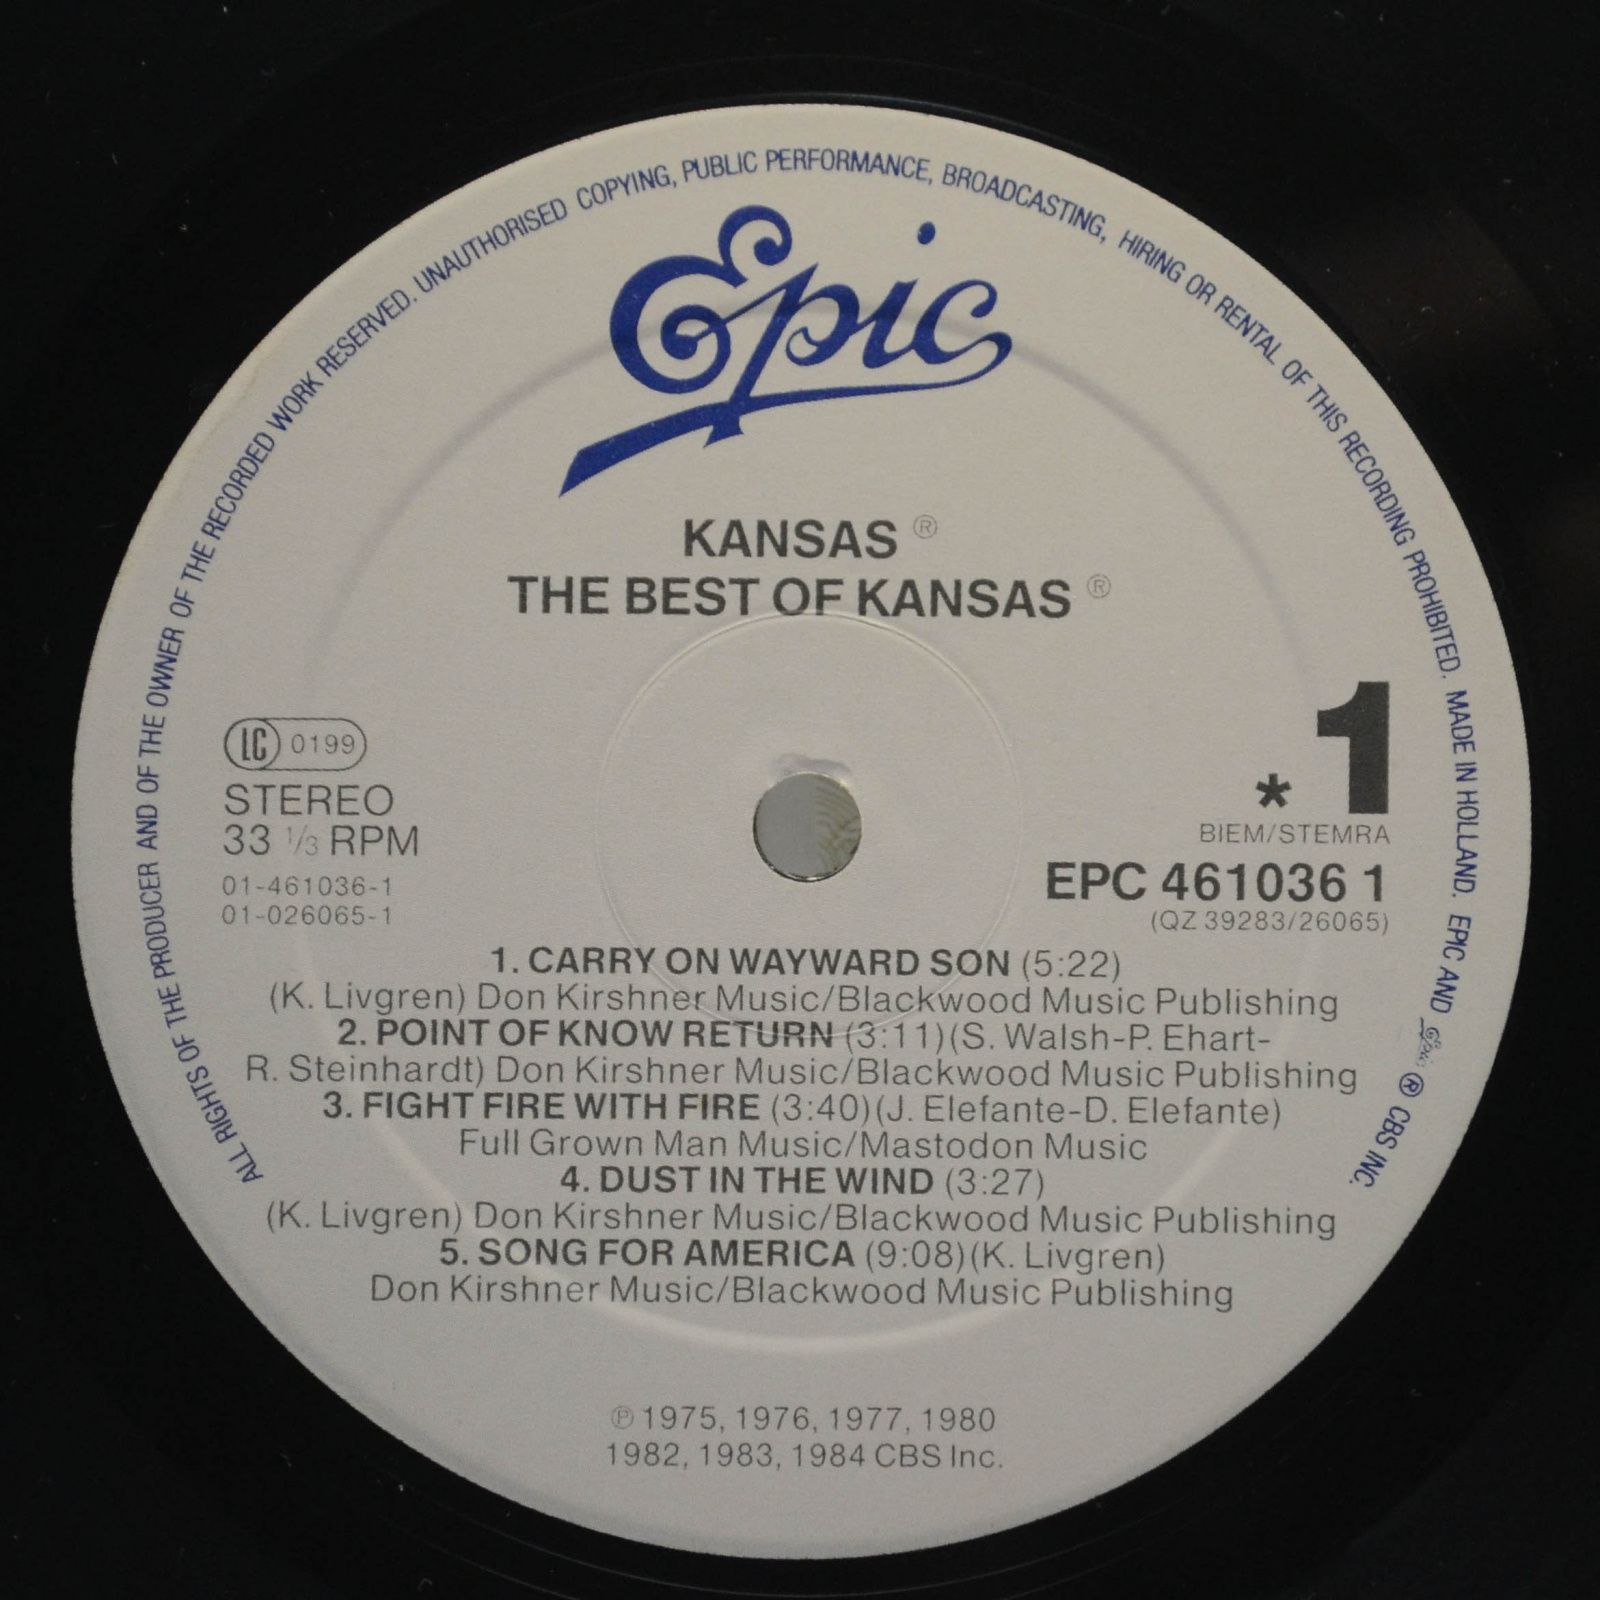 Kansas — The Best Of Kansas, 1984